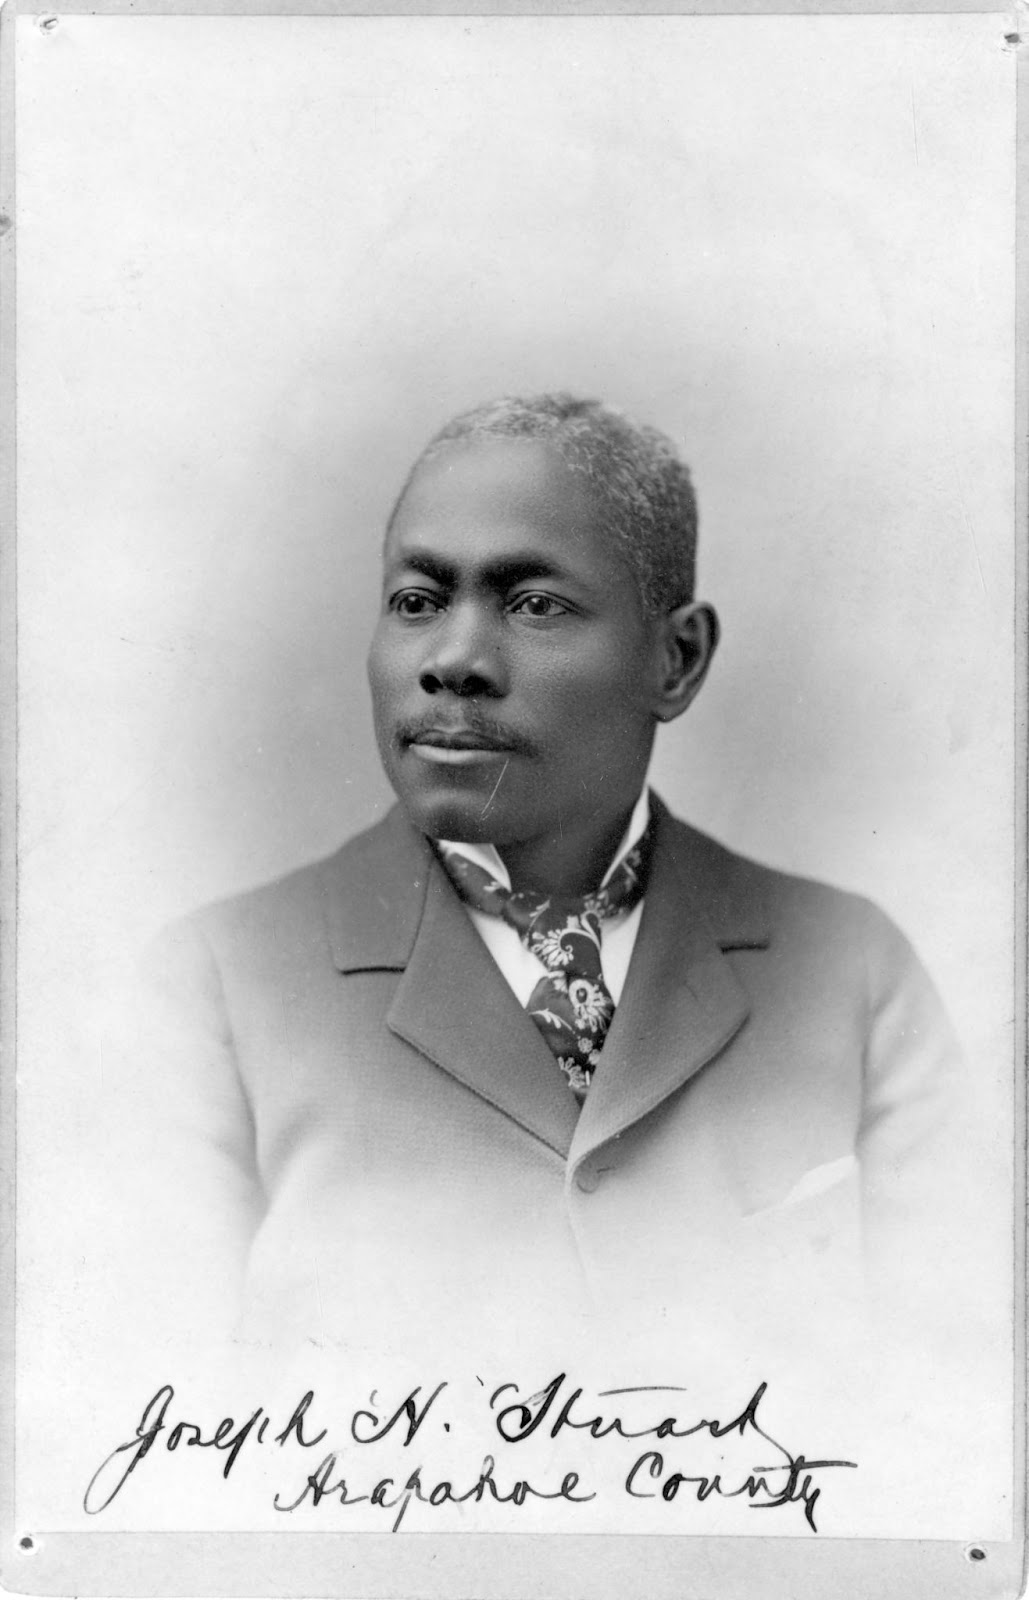 A portrait of a Black man from the shoulders up. He is wearing a 19th century suit. Beneath him is written "Joseph H. Stuart, Arapahoe County".